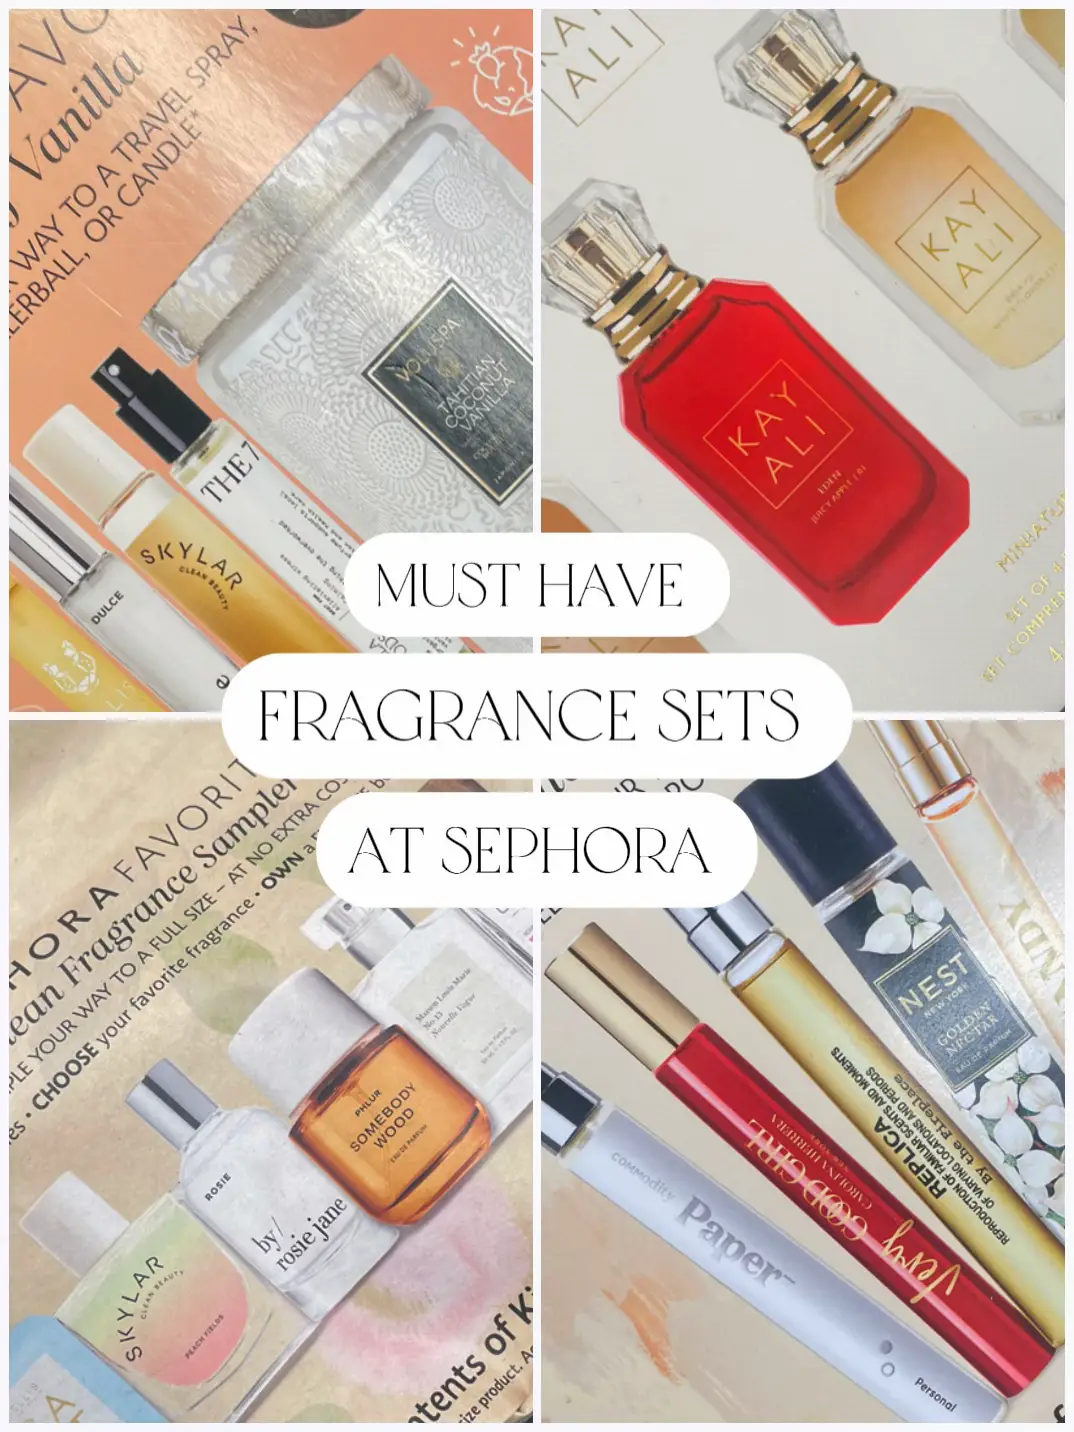 Sephora Fragrance Sample Set